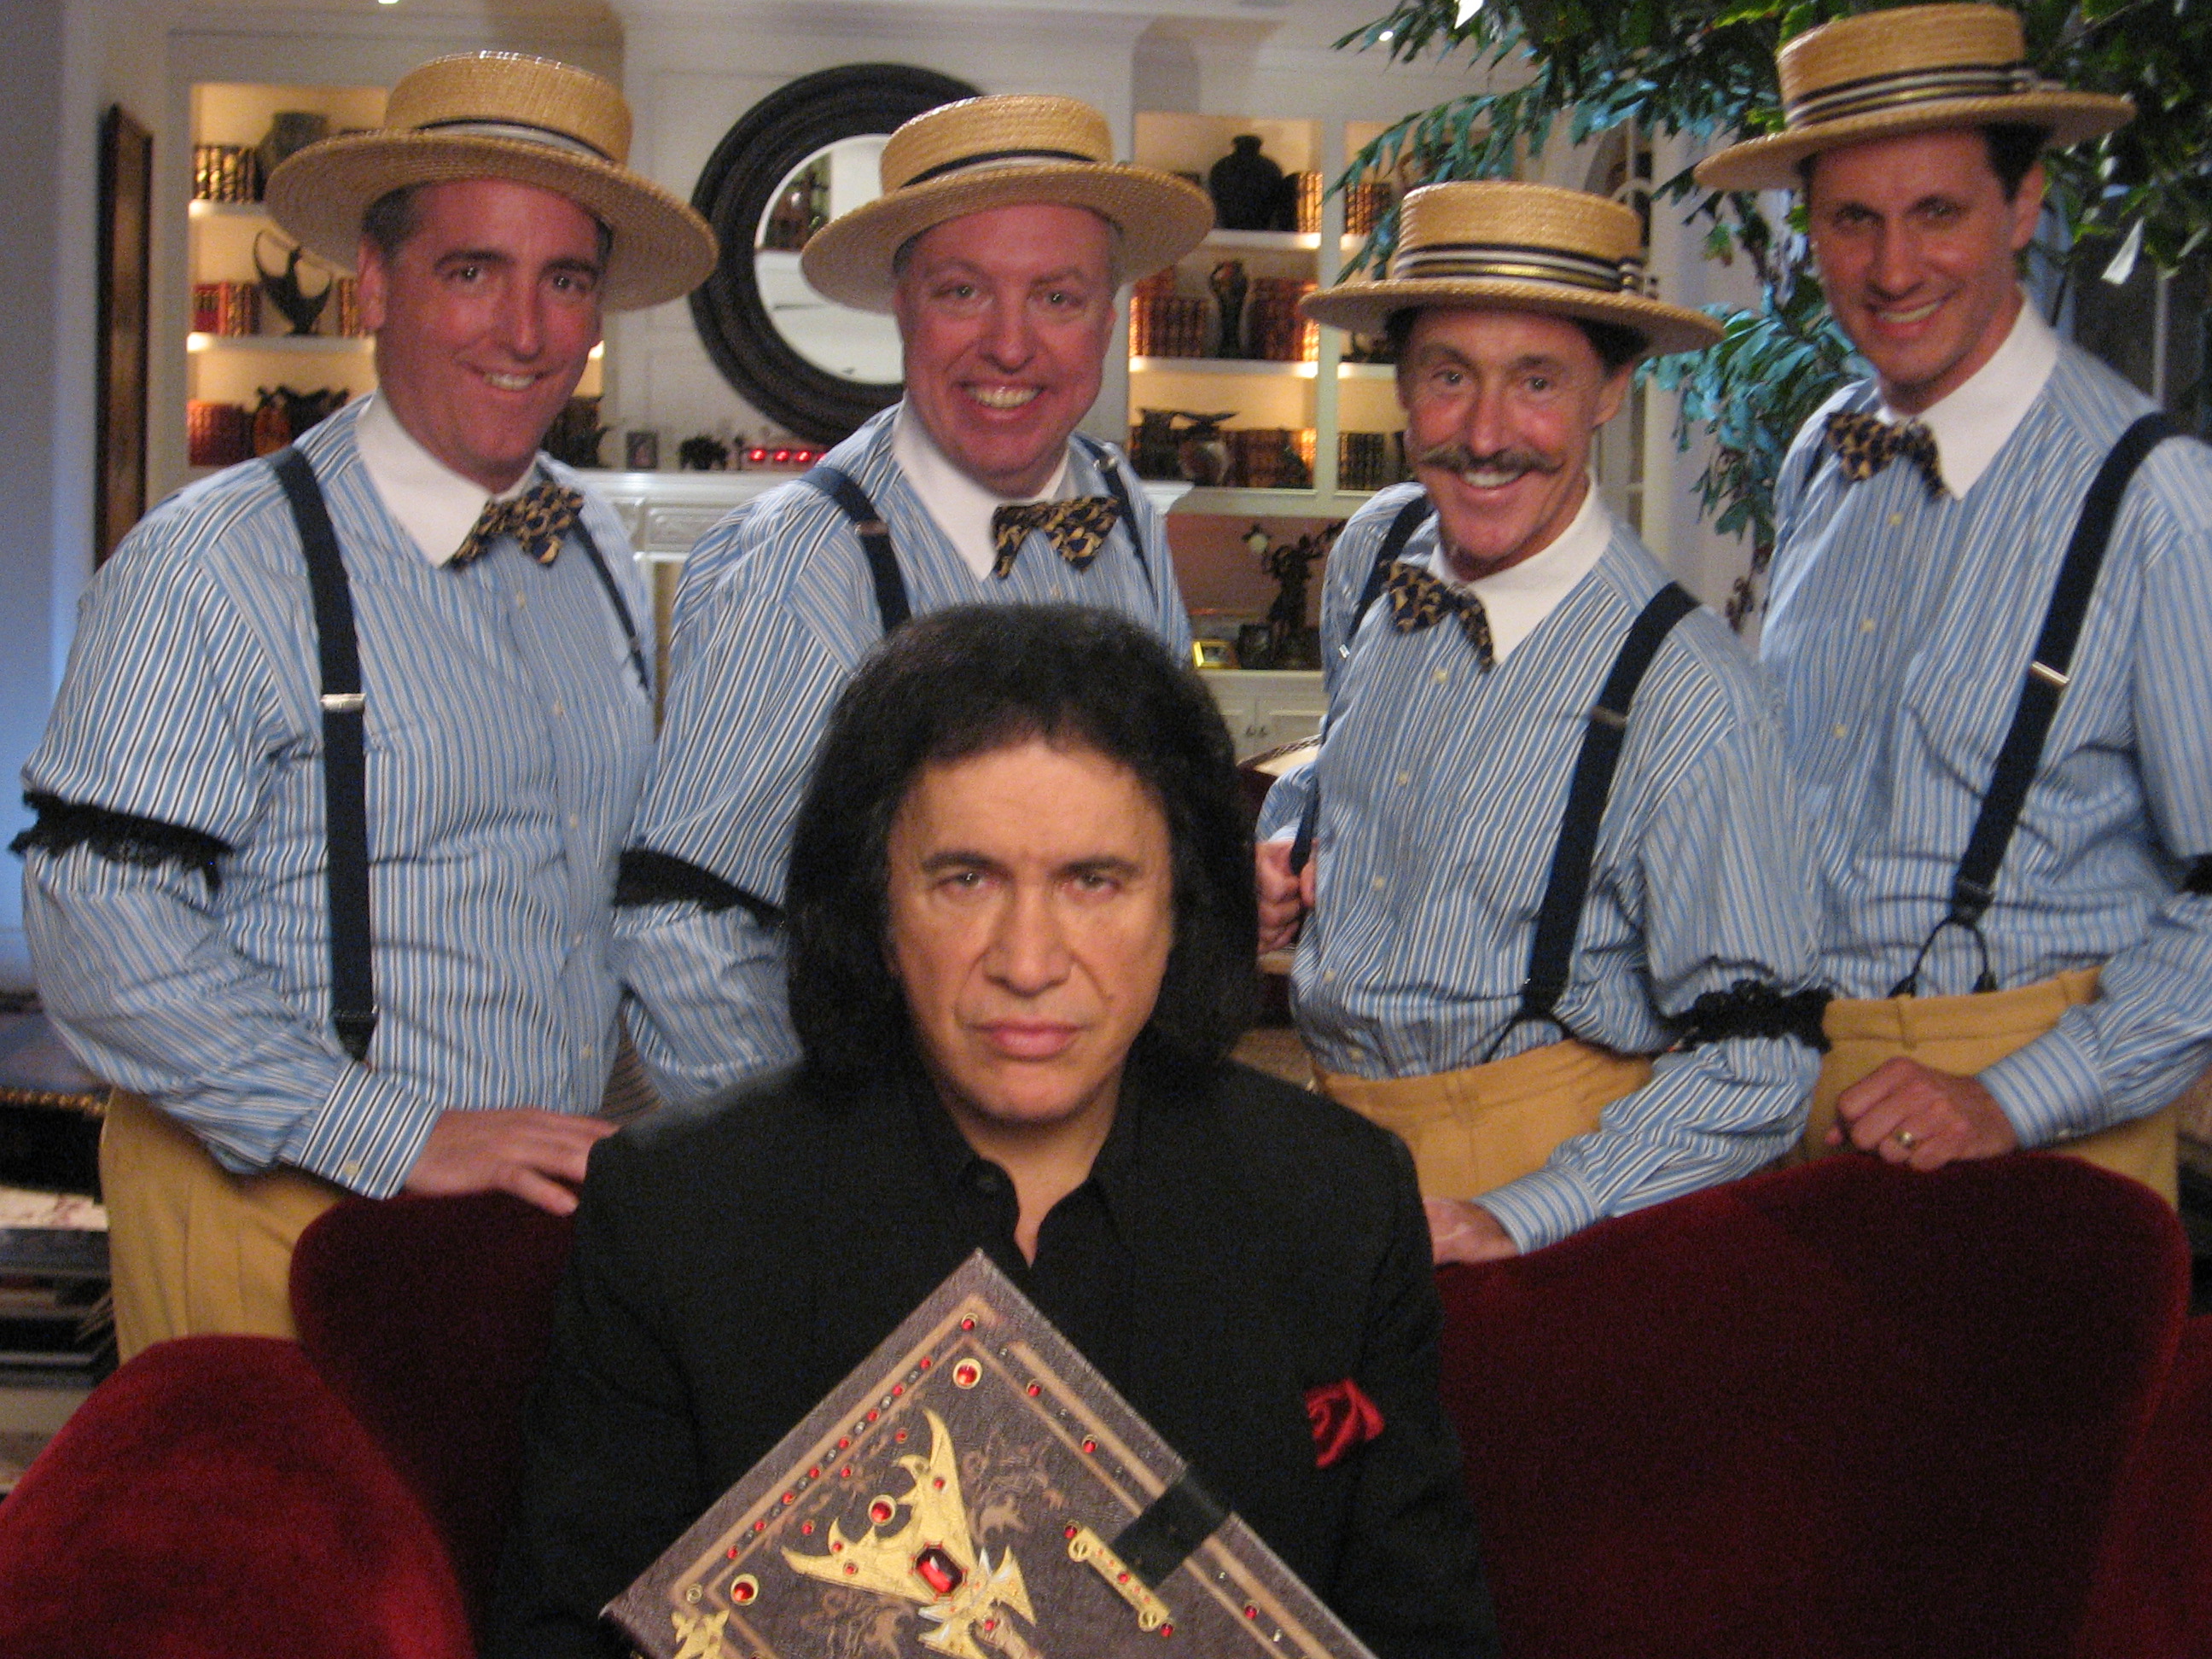 The Perfect Gentlemen (Phil Gold, Dan Jordan, Tim Reeder, and Jim Campbell) sing behind Gene Simmons on 